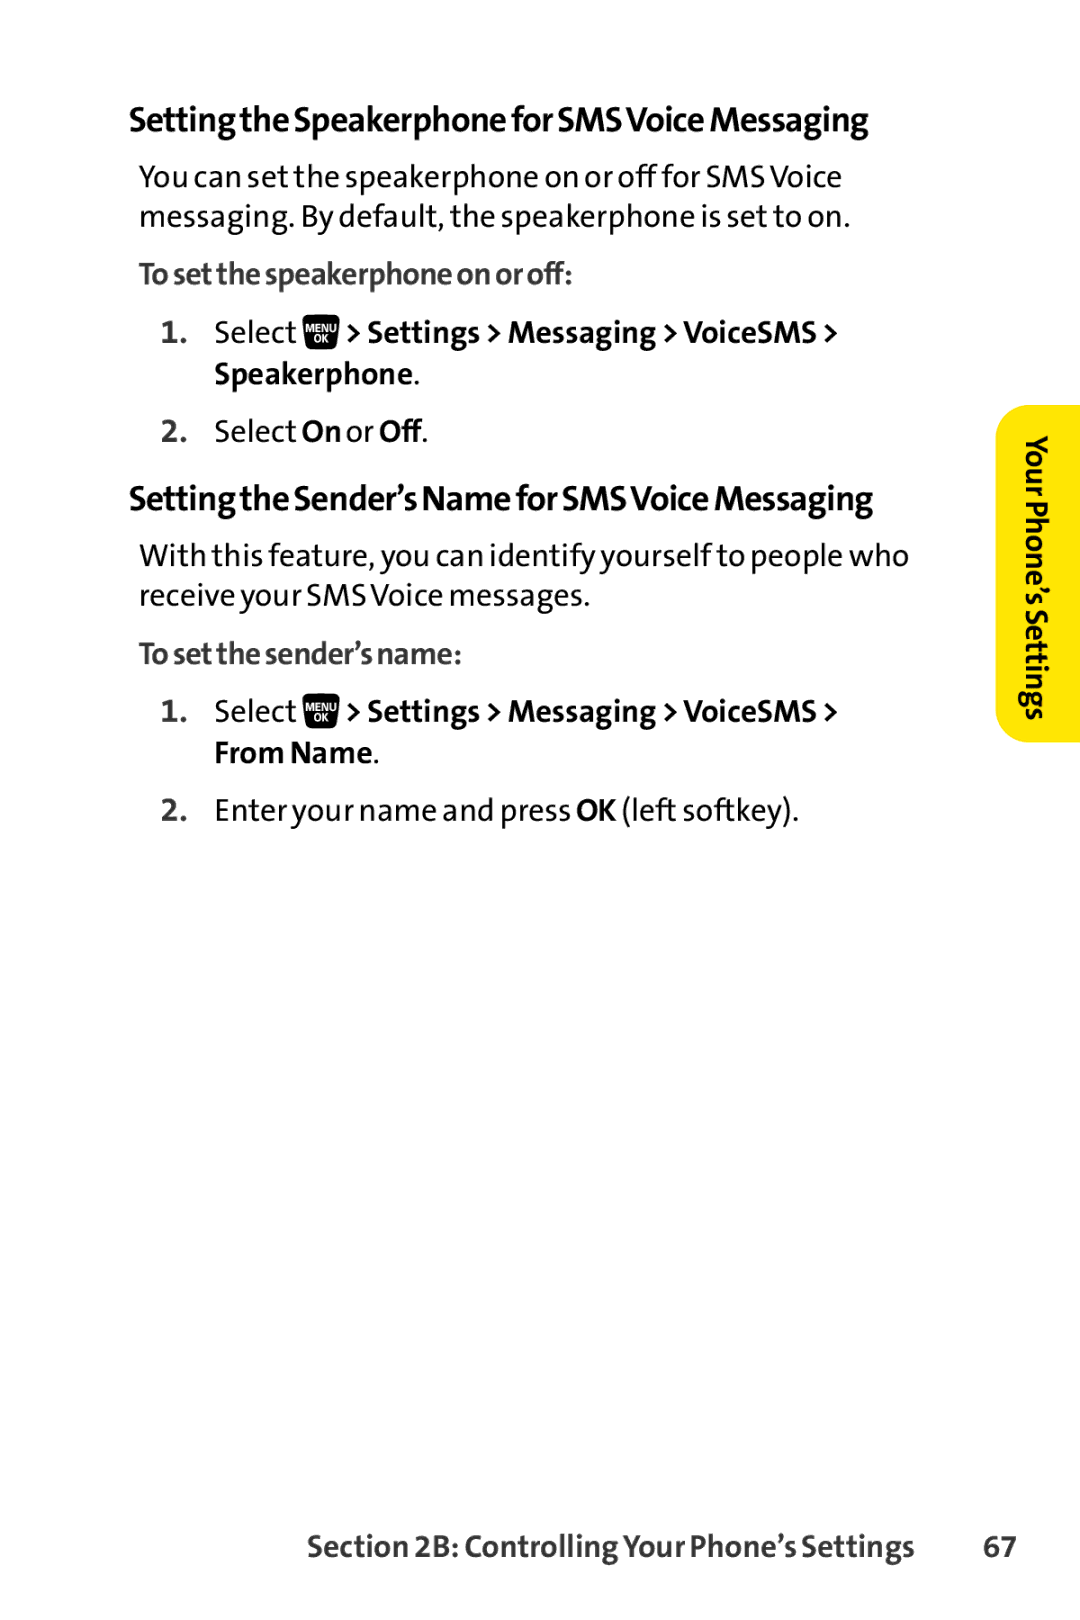 Sprint Nextel SCP-3200 manual SettingtheSpeakerphoneforSMSVoiceMessaging, SettingtheSender’sNameforSMSVoiceMessaging 